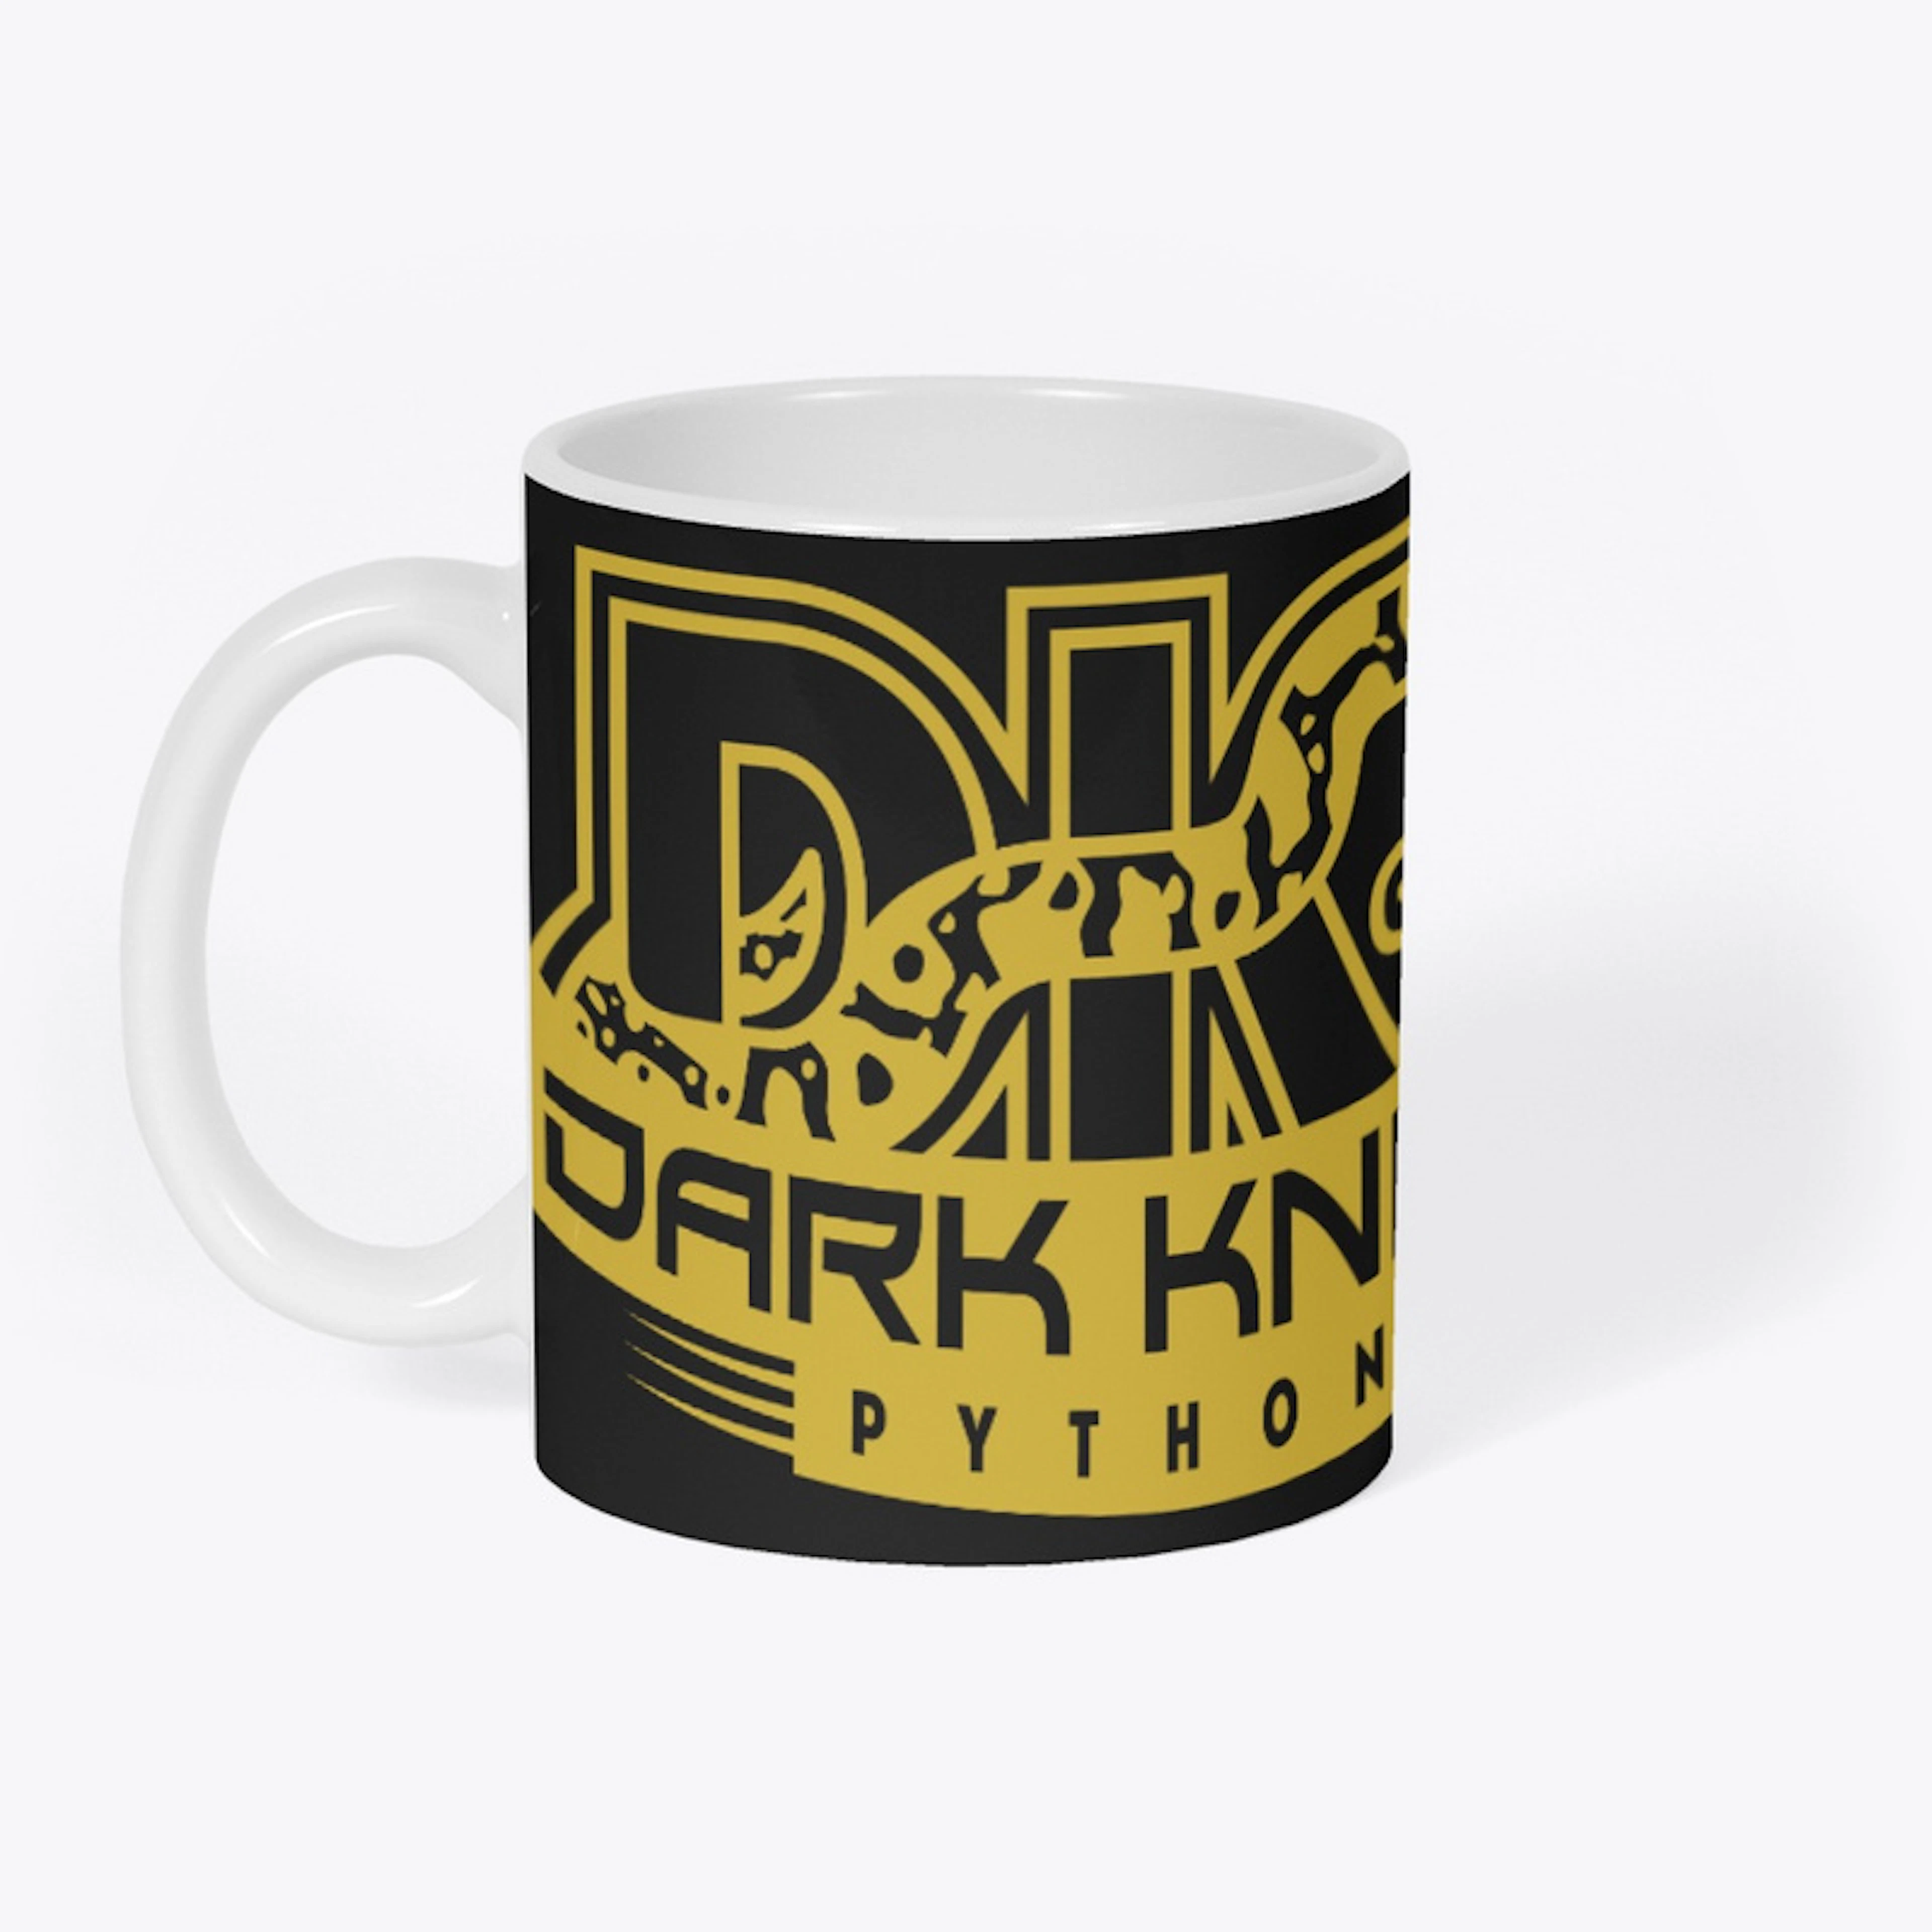 Dark Knight Pythons (Gold)